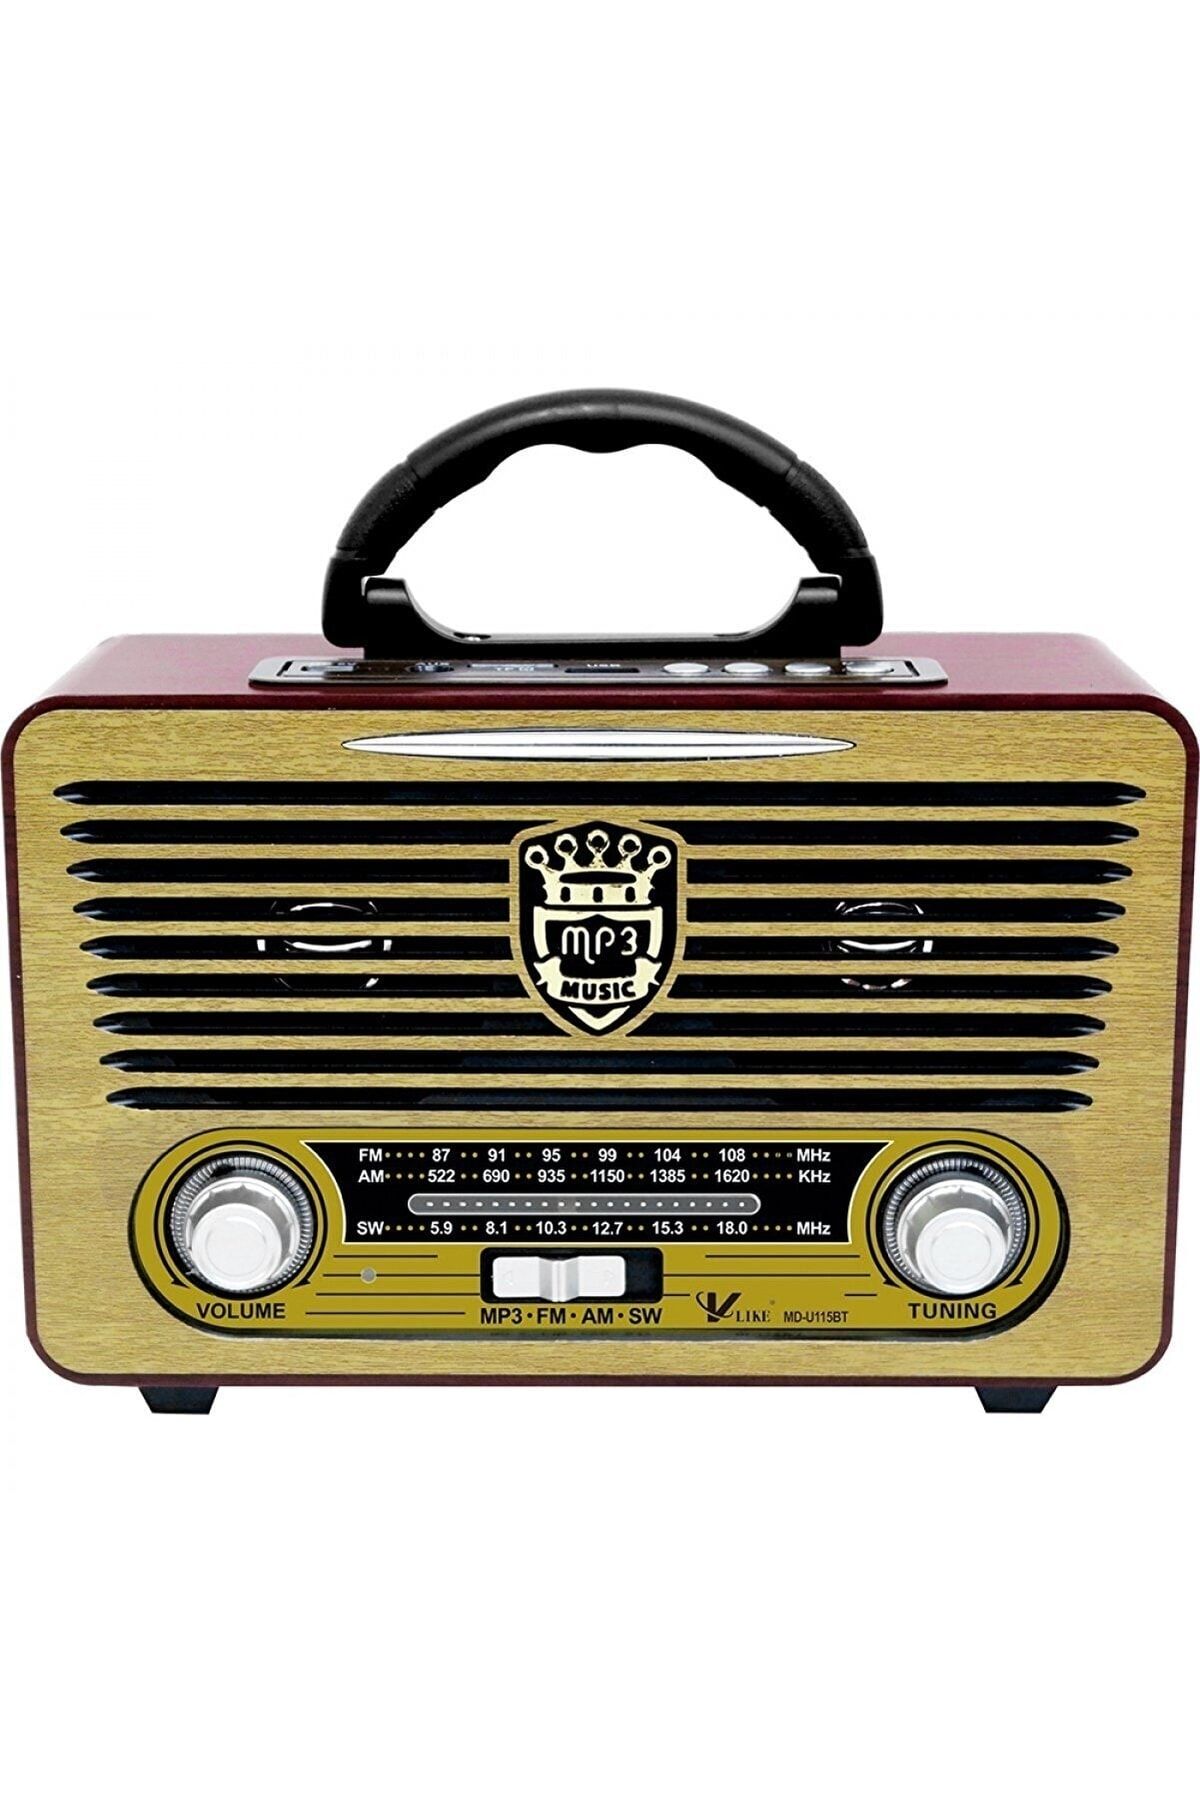 VOOKA A++ Kalite Nostalji Eskitme Bluetooth Hoparlör Fm Radio Sd Kart Usb Yüksek Ses Eski Nostalji 115bt